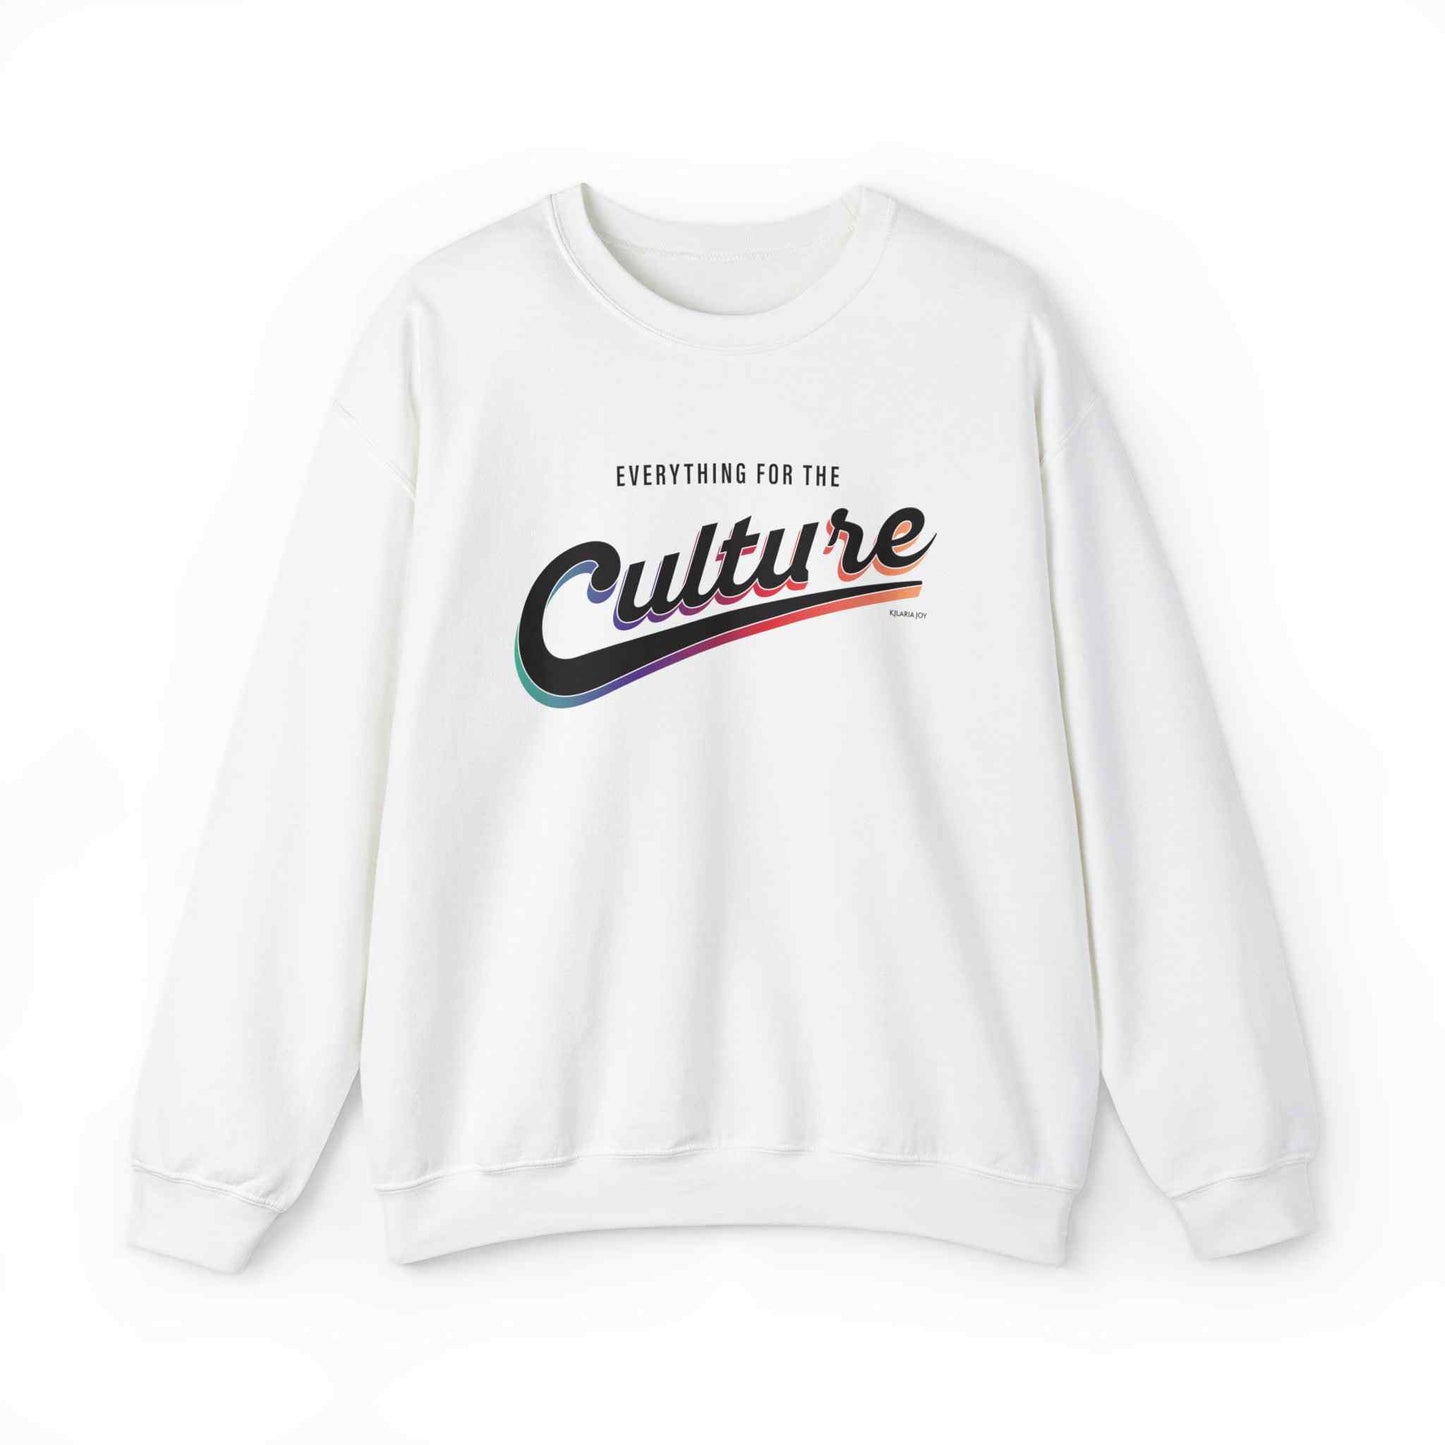 For the Culture Men's Classic Fit Sweatshirt